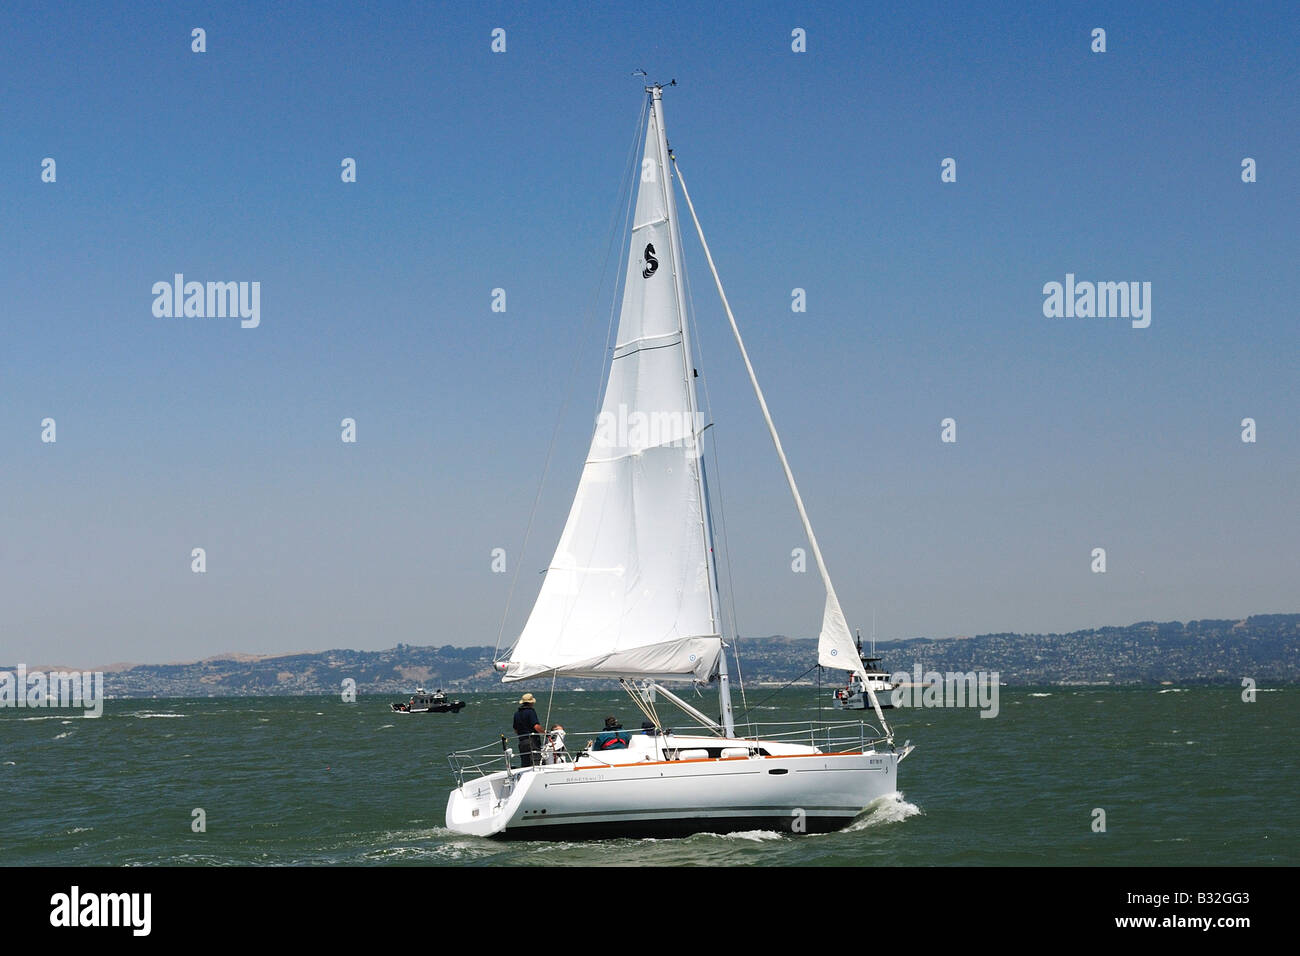 Sailboat in San Francisco bay Stock Photo